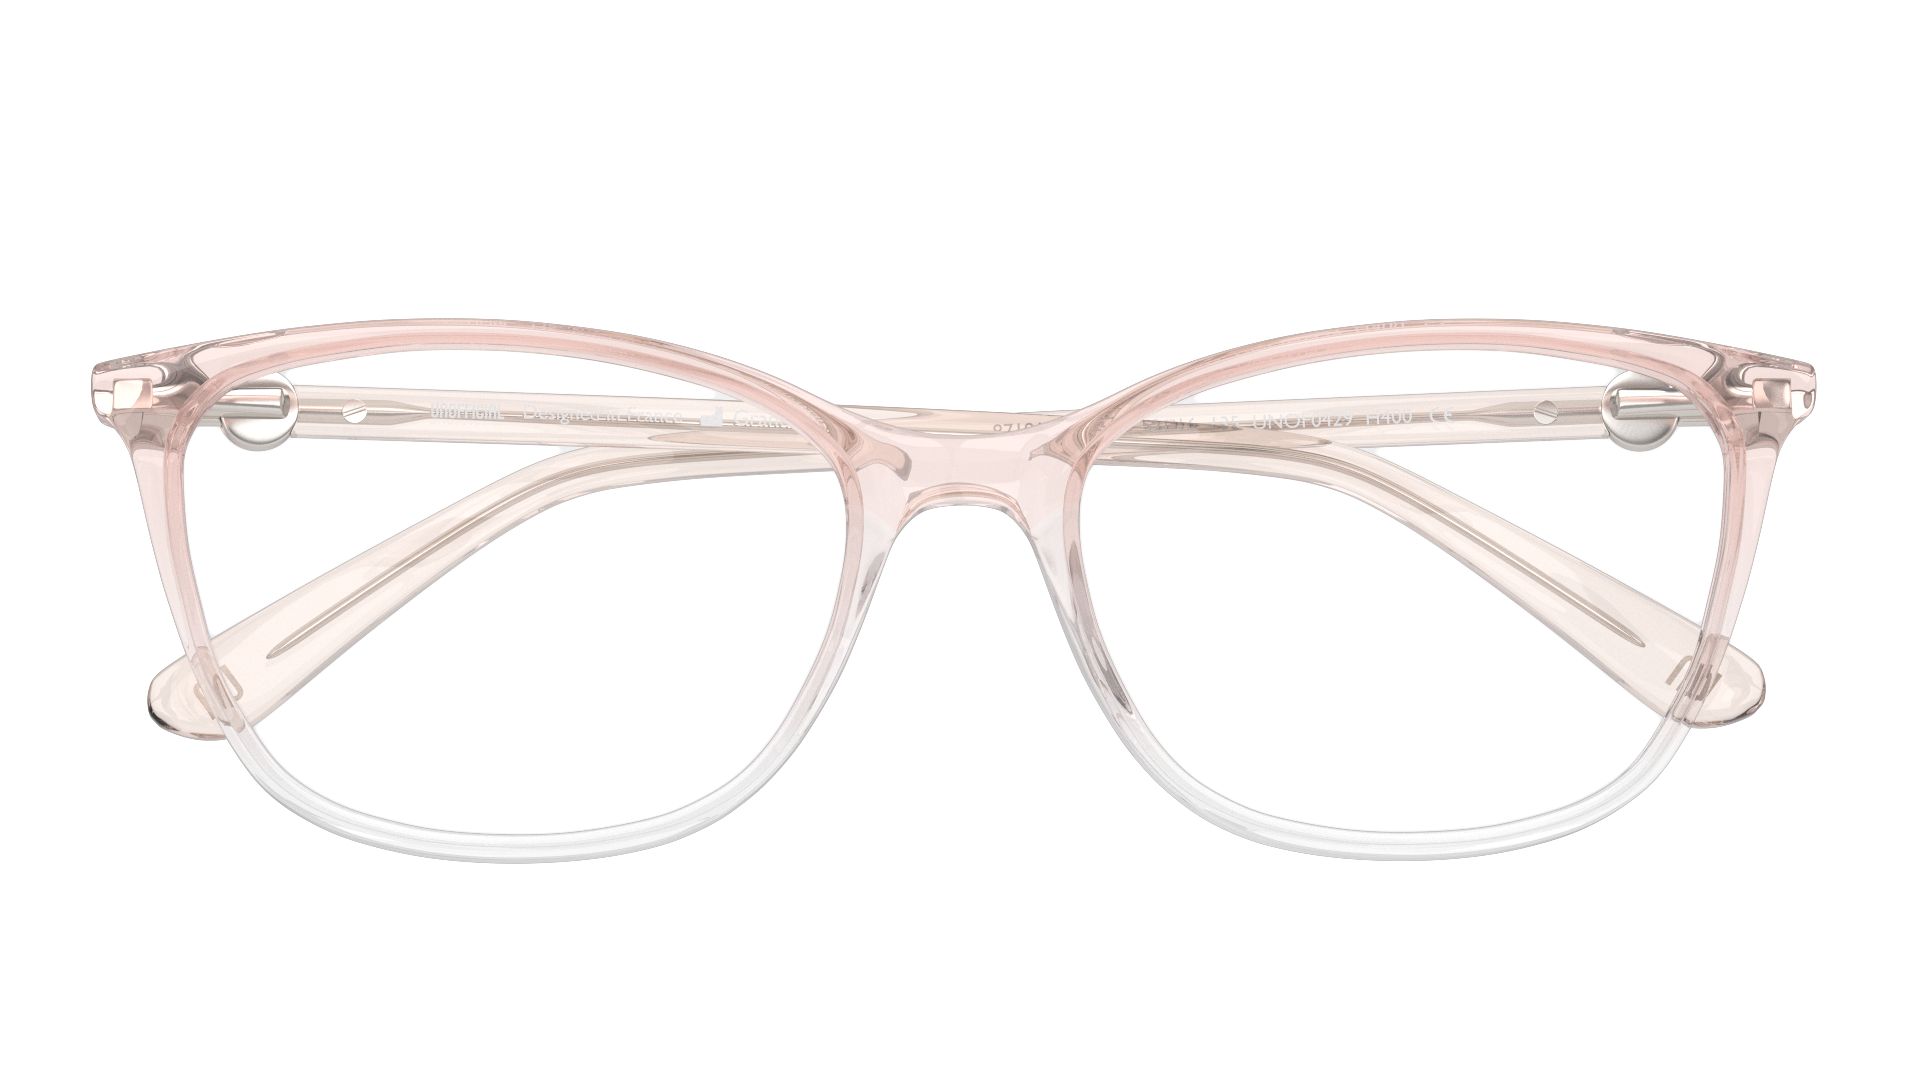 Folded Unofficial UNOF0429 Glasses Transparent / Transparent, Pink